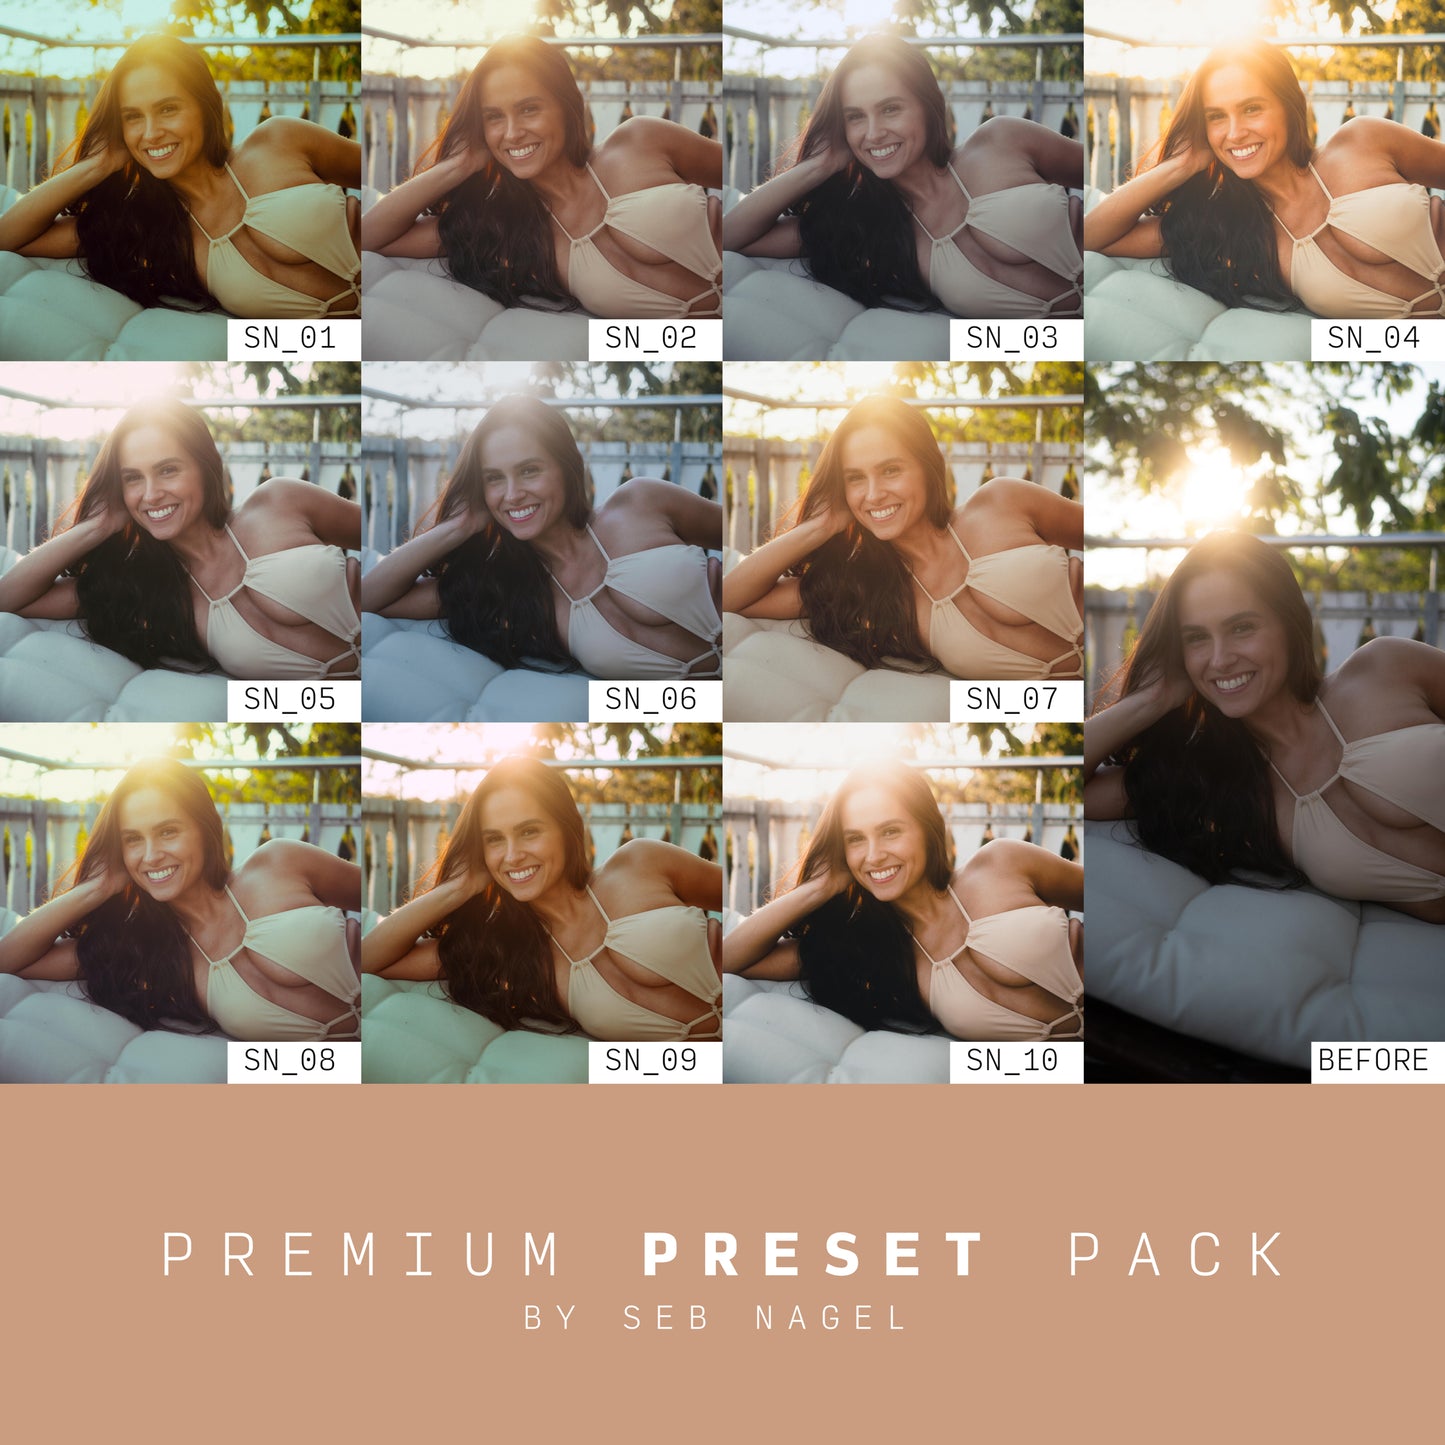 SEB NAGEL Premium Lightroom Preset Pack